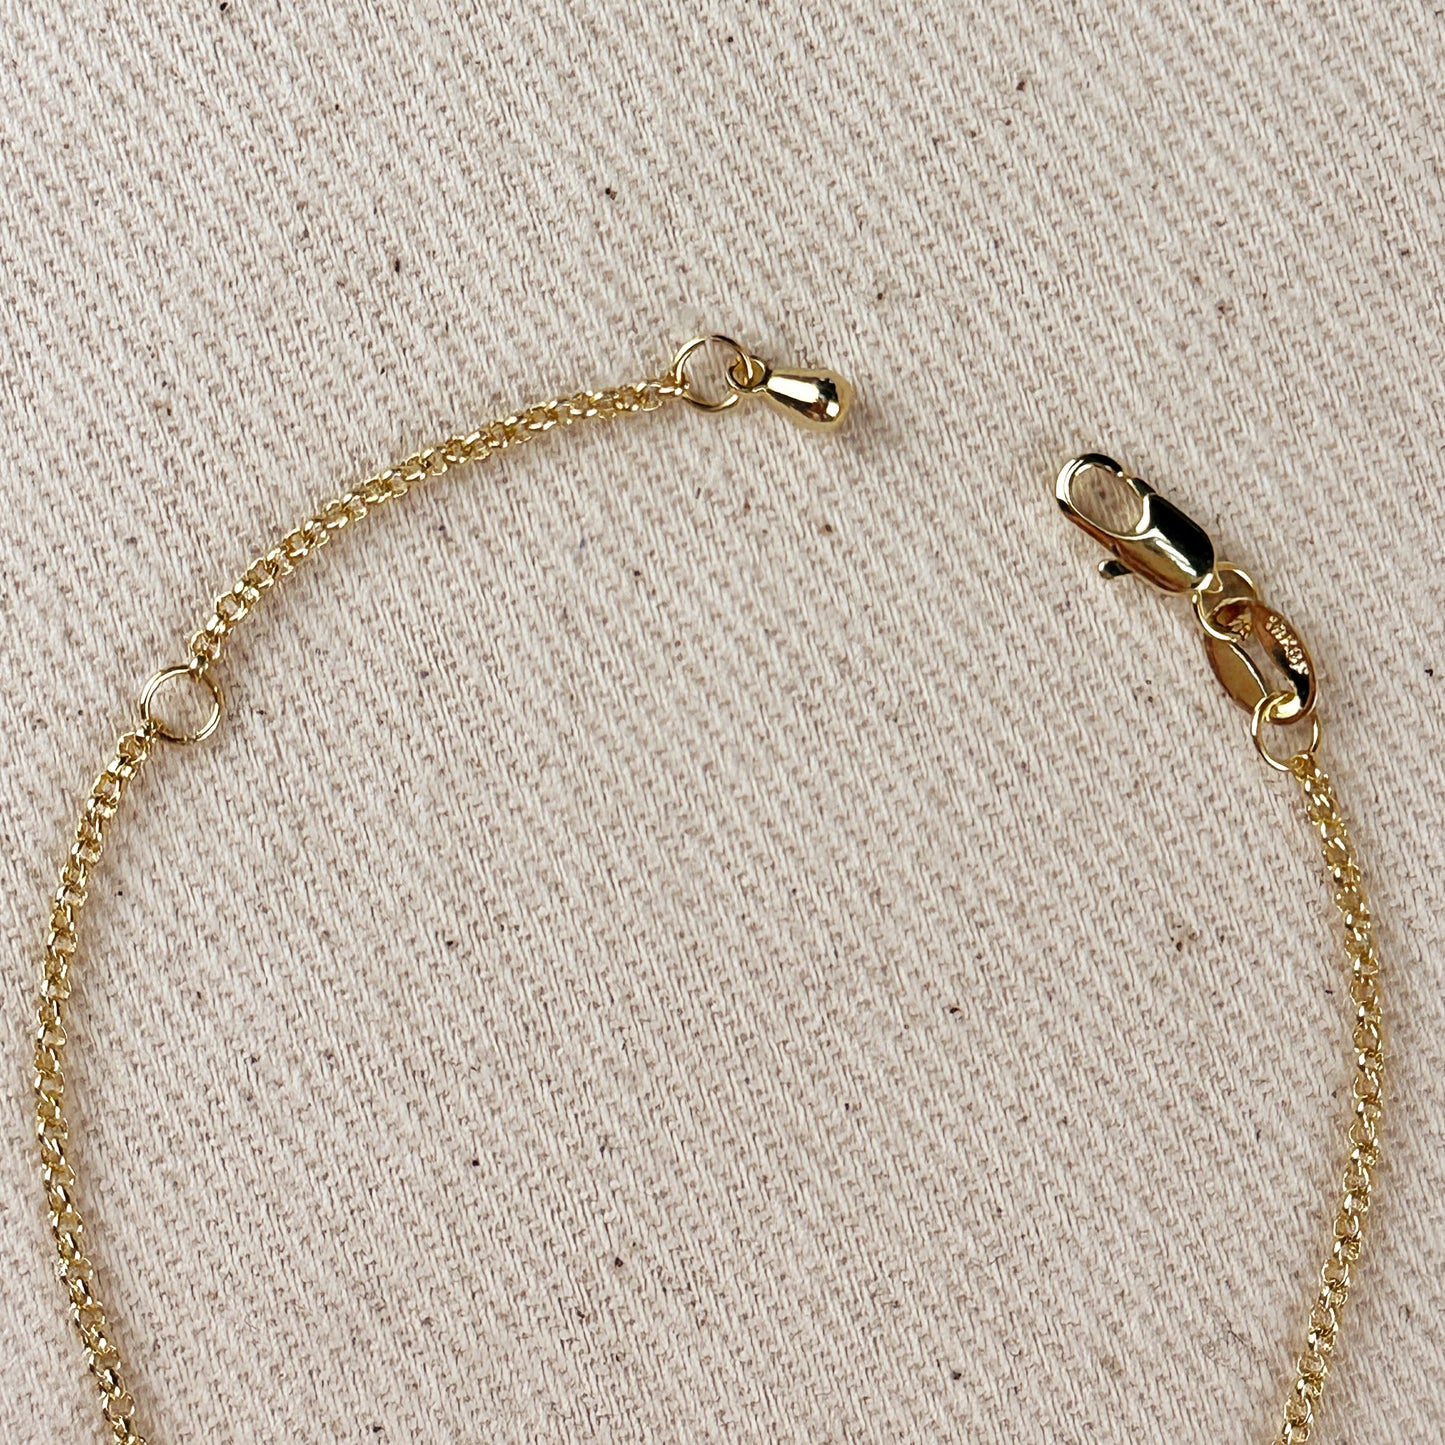 18k Gold Filled Row of Baroque Pearls Bracelet